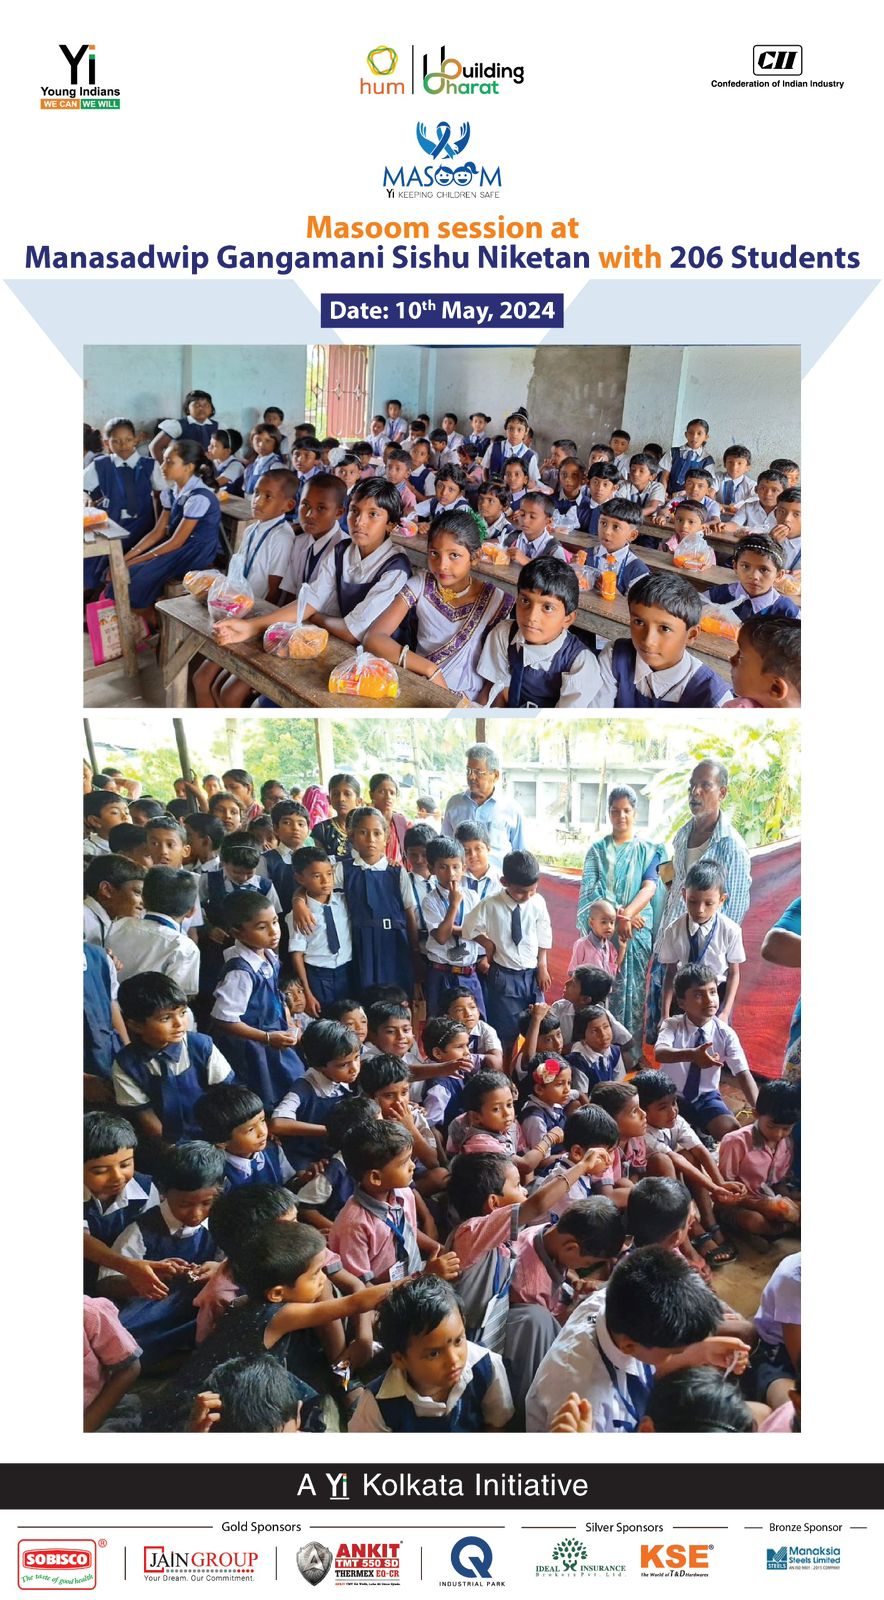 Yi24 | Masoom - Awareness Session at Manasadwip Gangamani Sishu Niketan with 206 Students